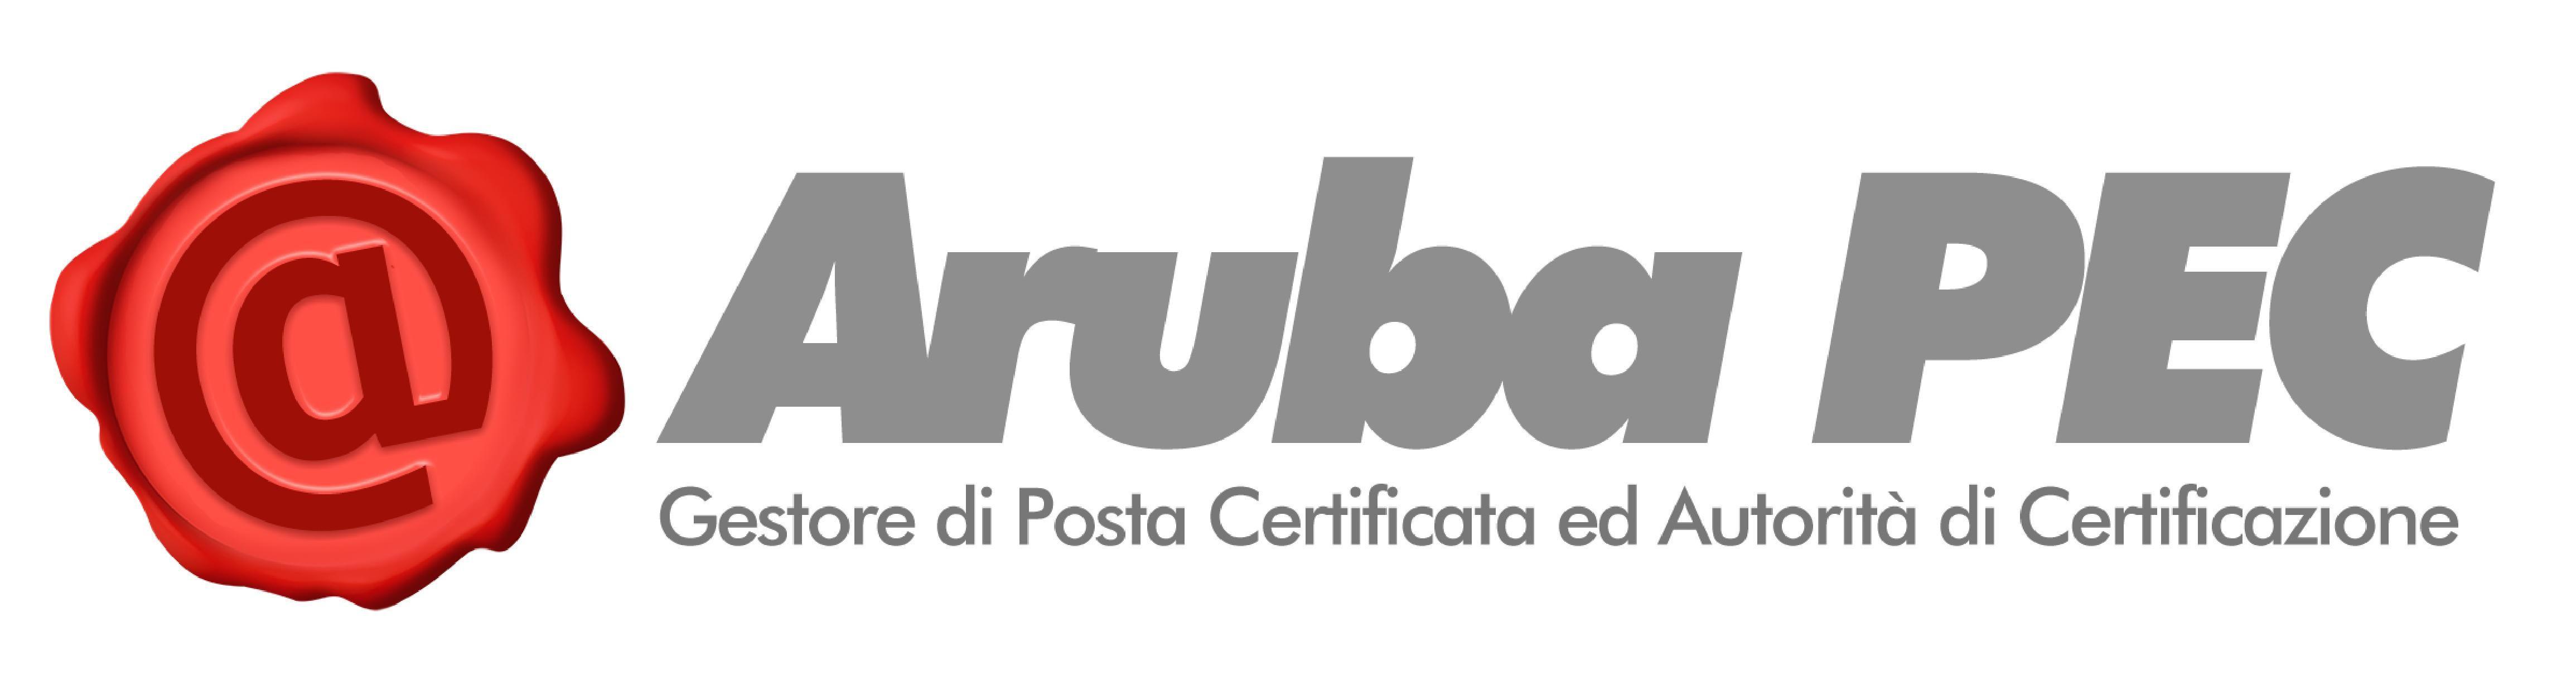 PEC Logo - 2018_Aruba-Pec-Logo-page-001 - FORUM PA 2018